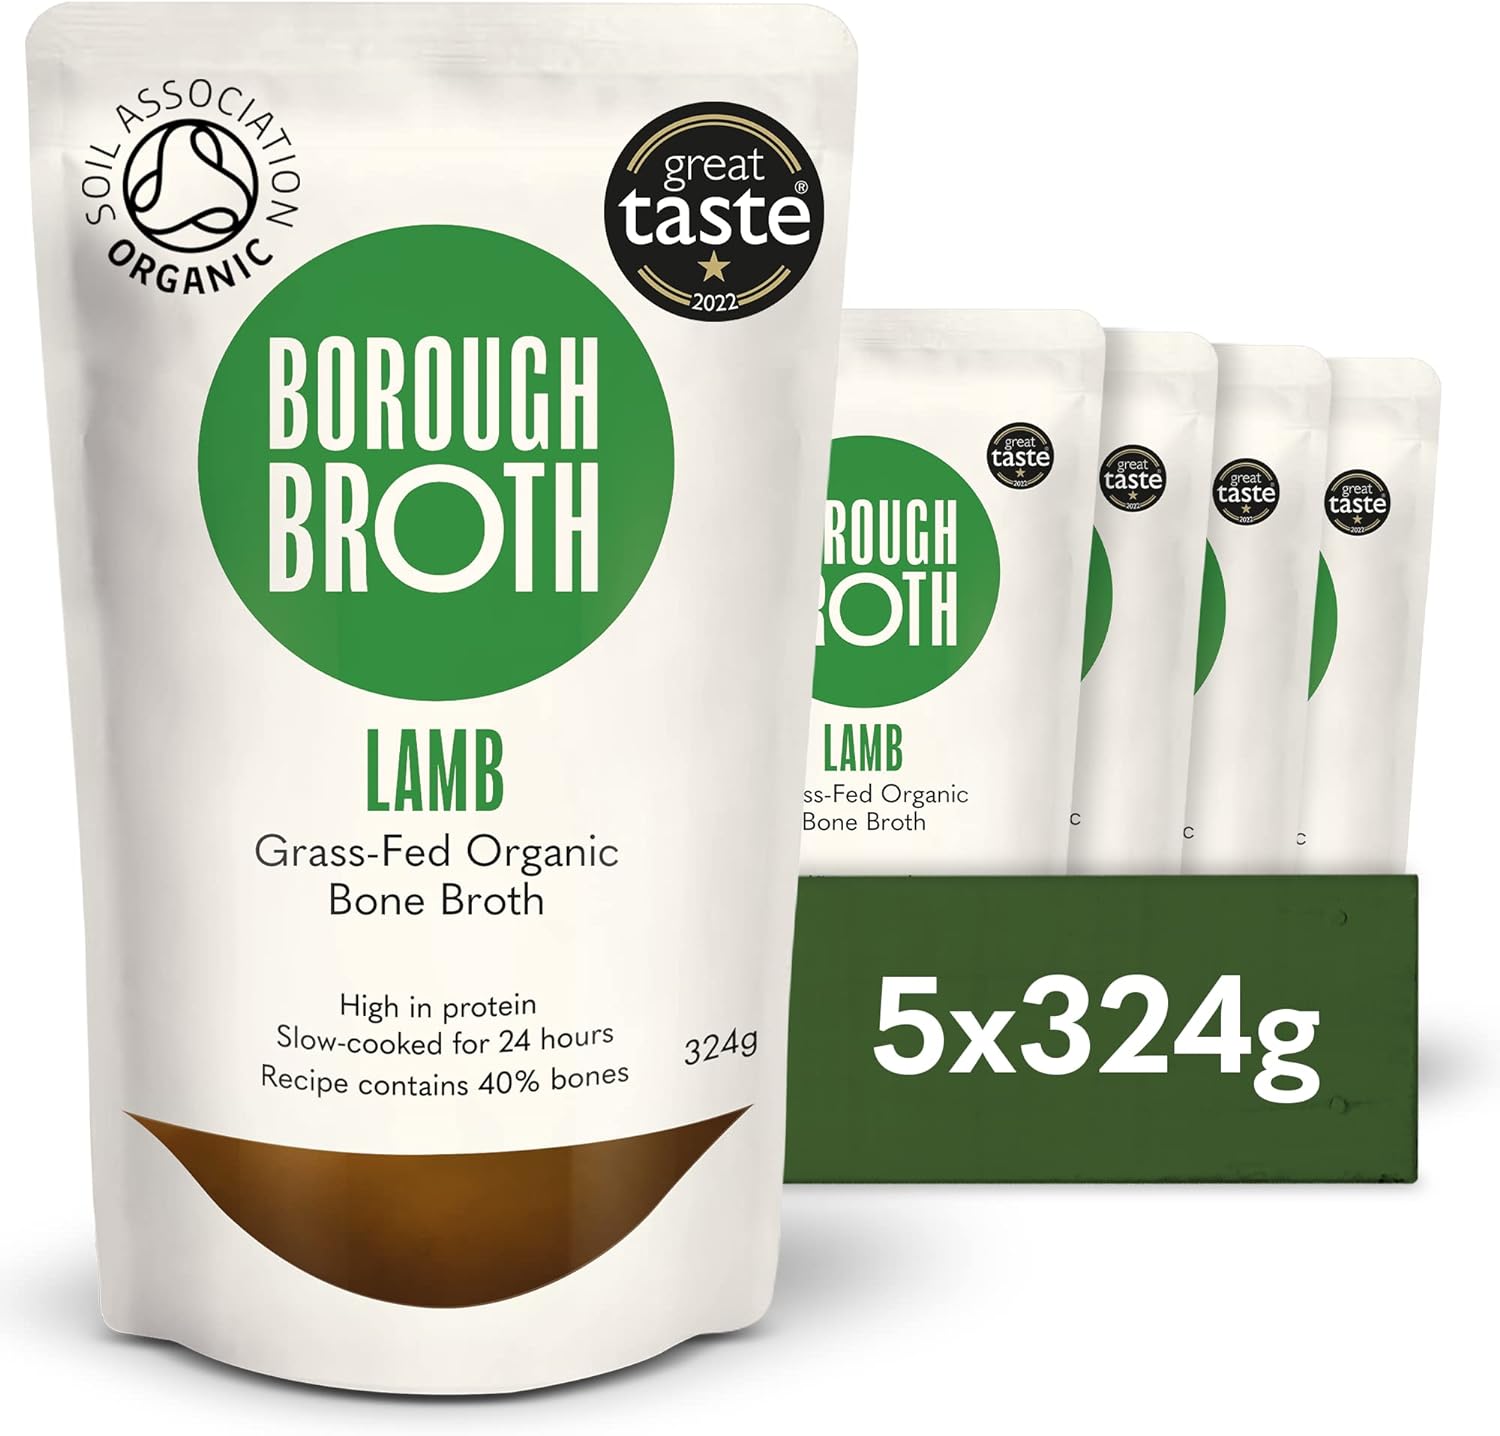 Organic Lamb Bone Broth by Borough Broth - Made fresh with Grass-Fed Lamb & British Spring Water